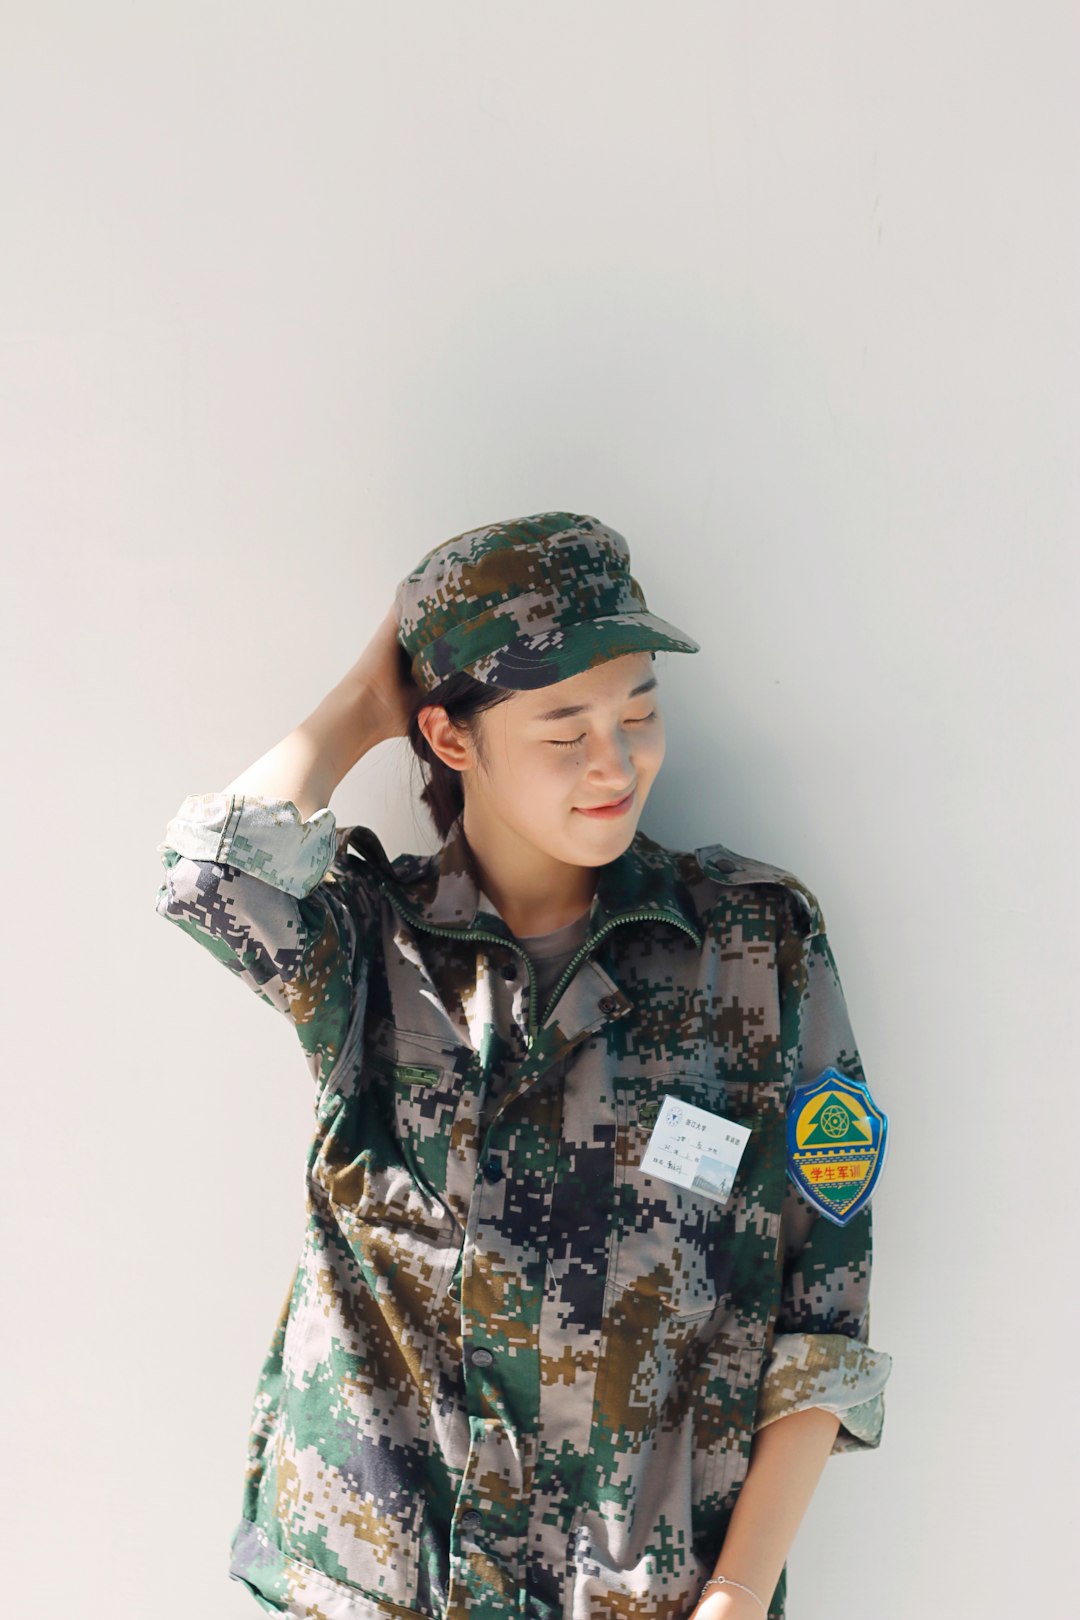 woman wearing camouflage uniform